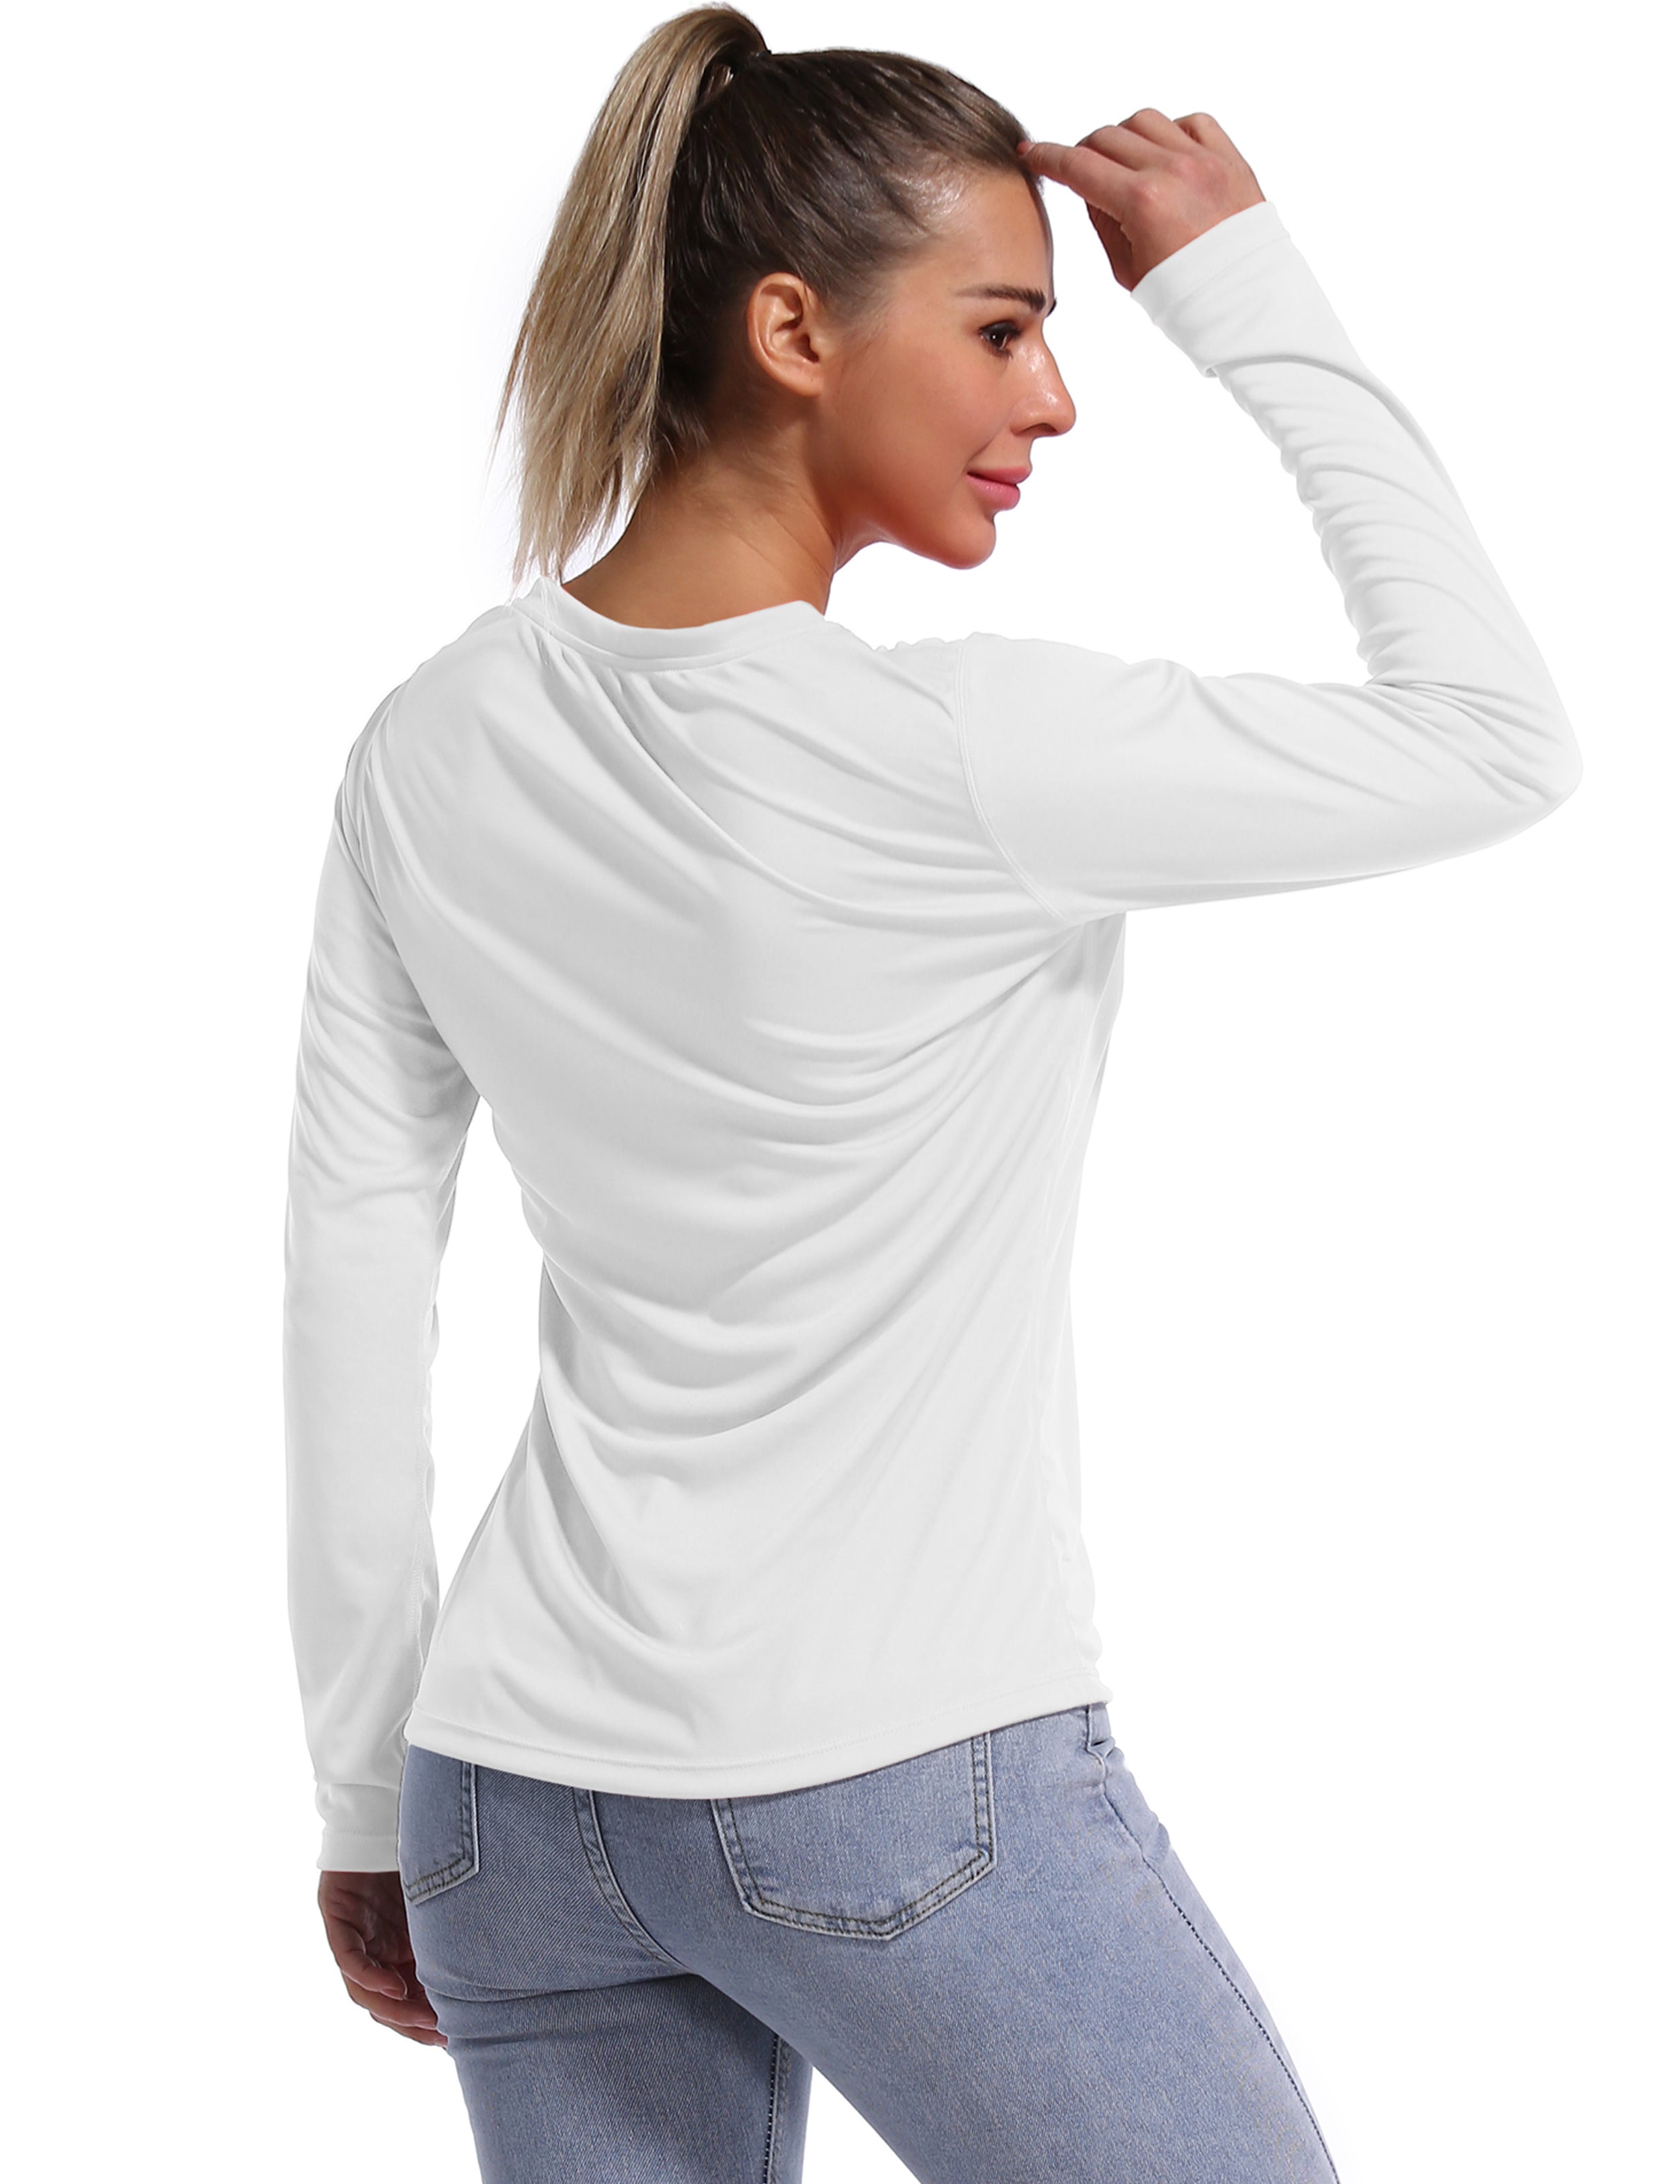 V Neck Long Sleeve Athletic Shirts white_Golf